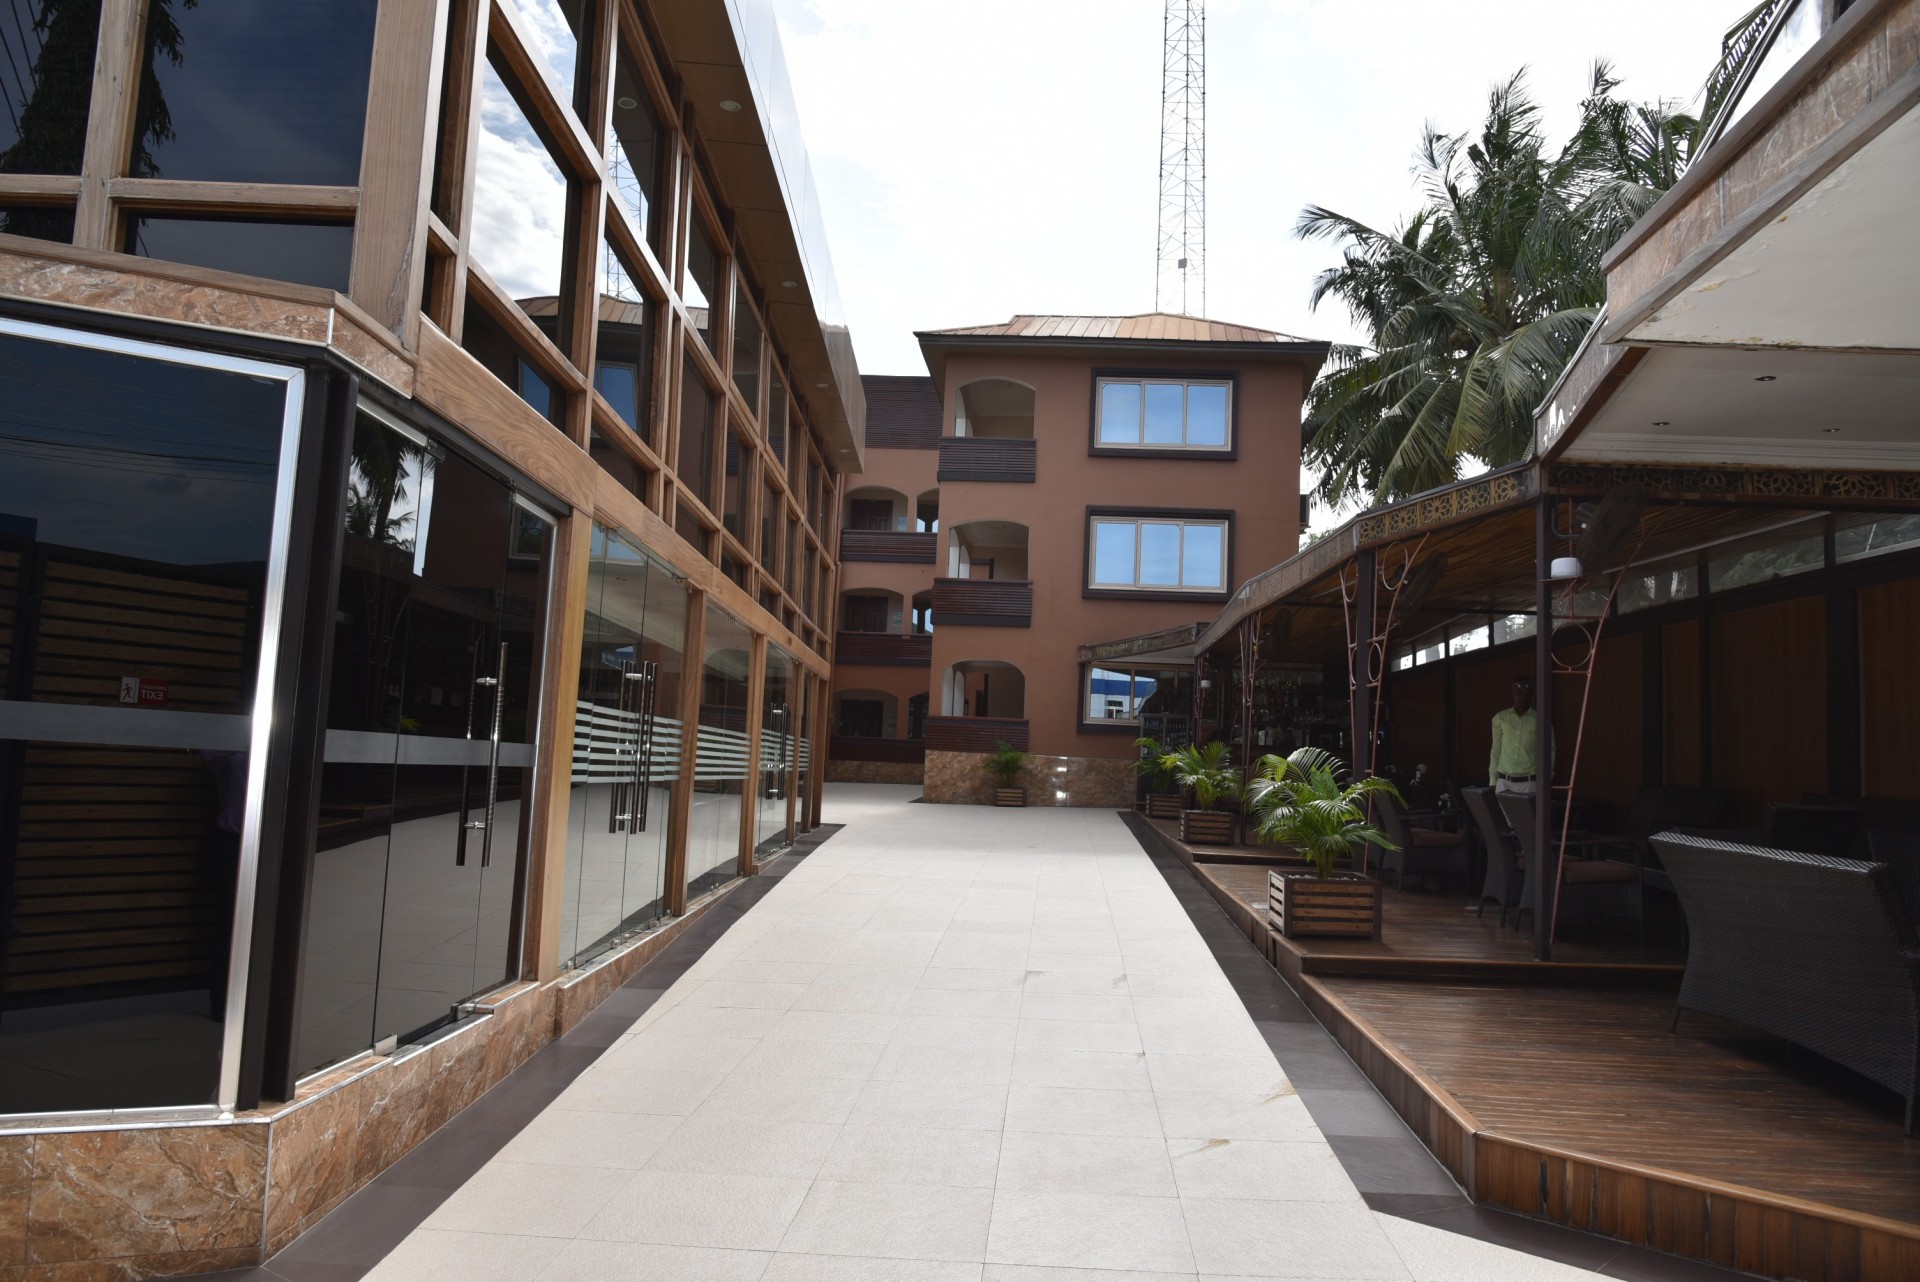 Silicon Lodge Accra - Exterior View